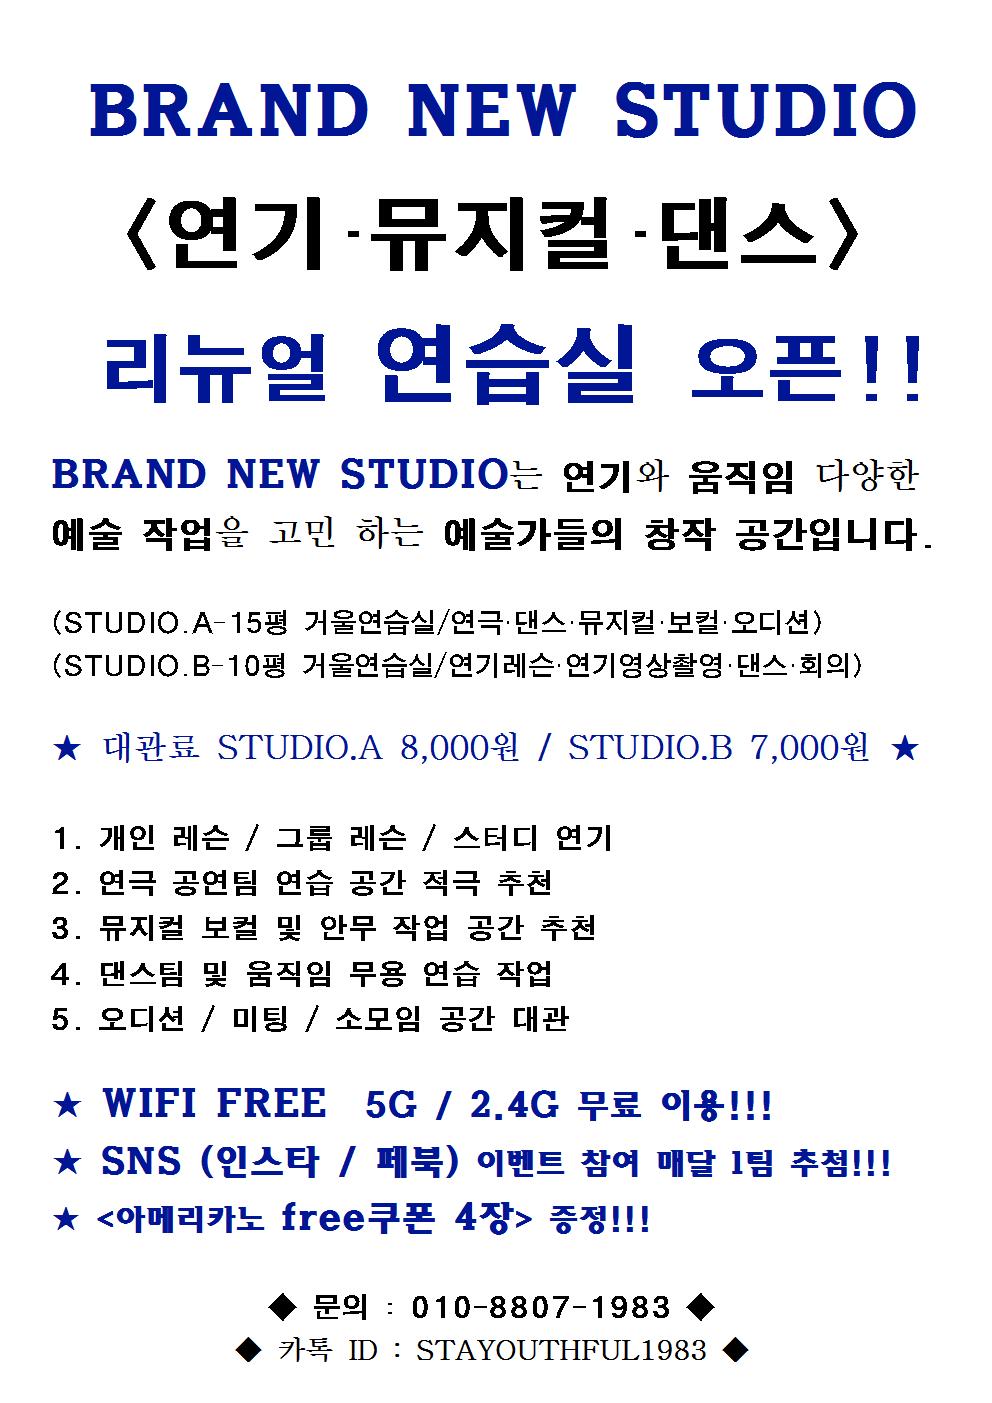 BRAND NEW STUDIO 온라인 홍보문서001.jpg